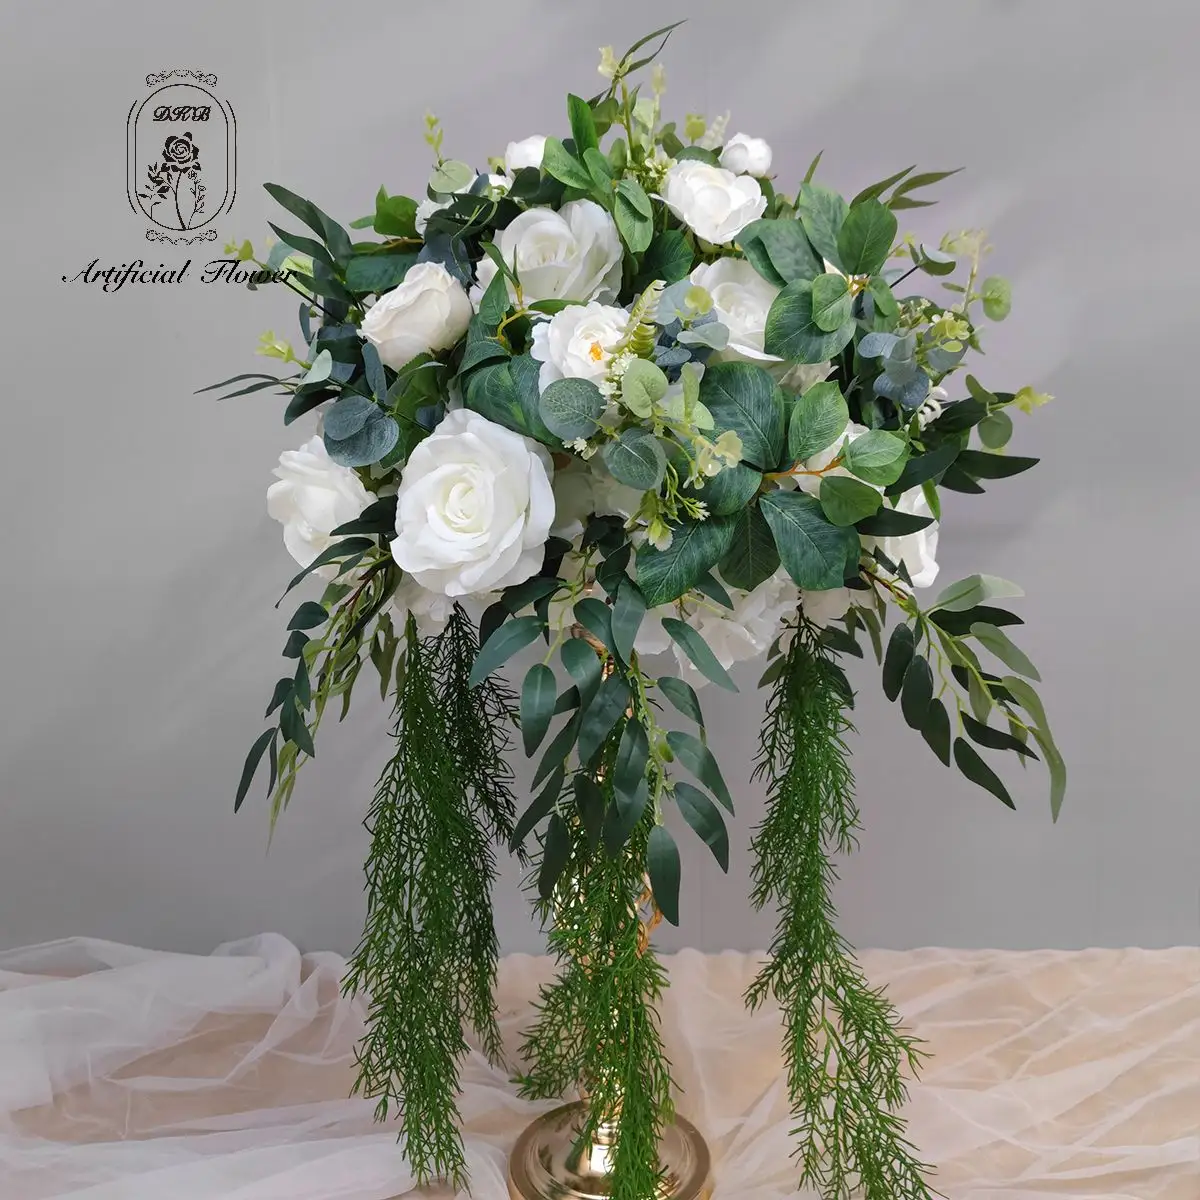 DKB-centro de mesa de flores artificiales para boda, centro de mesa, decoraciones